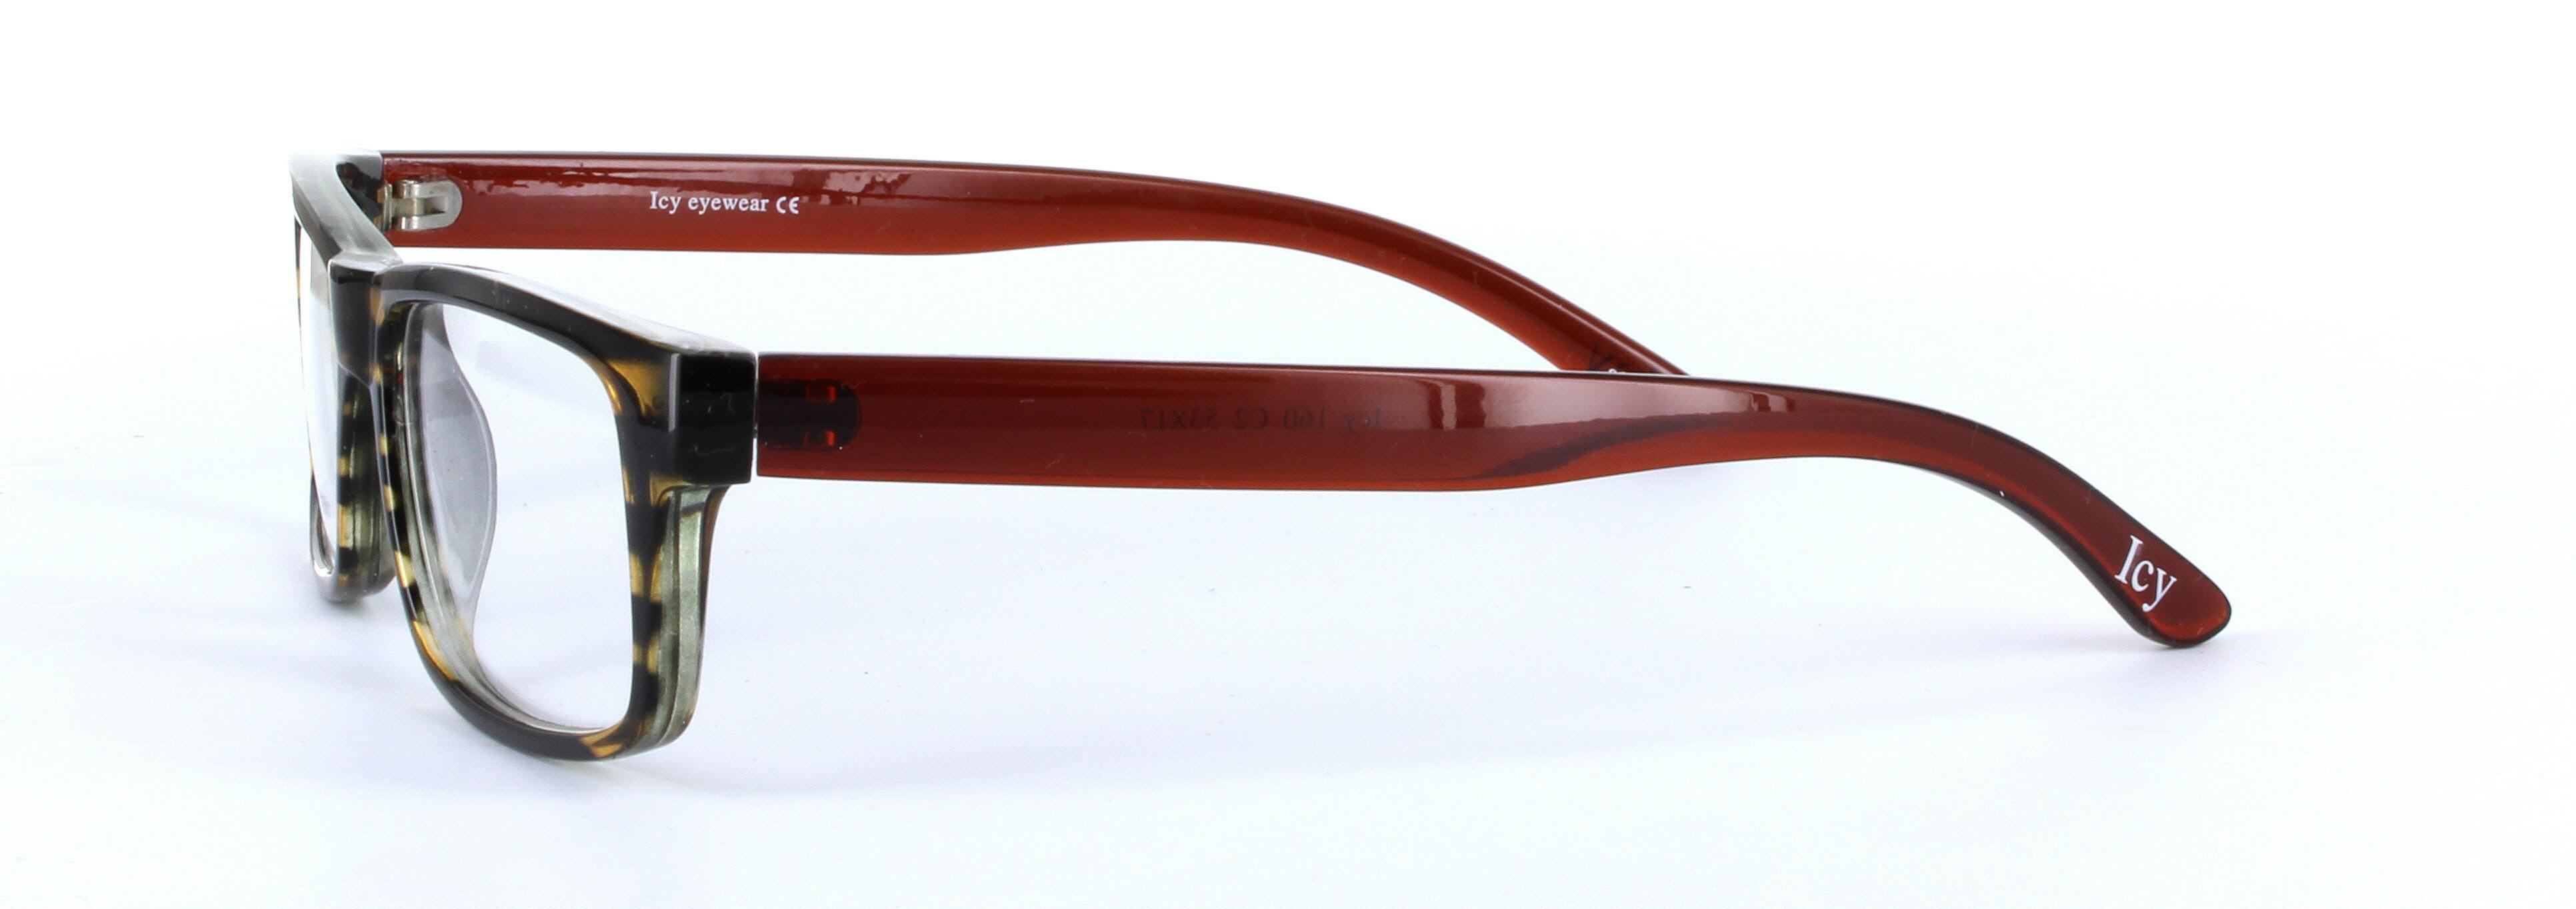 ICY 160 Brown Full Rim Rectangular Square Plastic Glasses - Image View 2